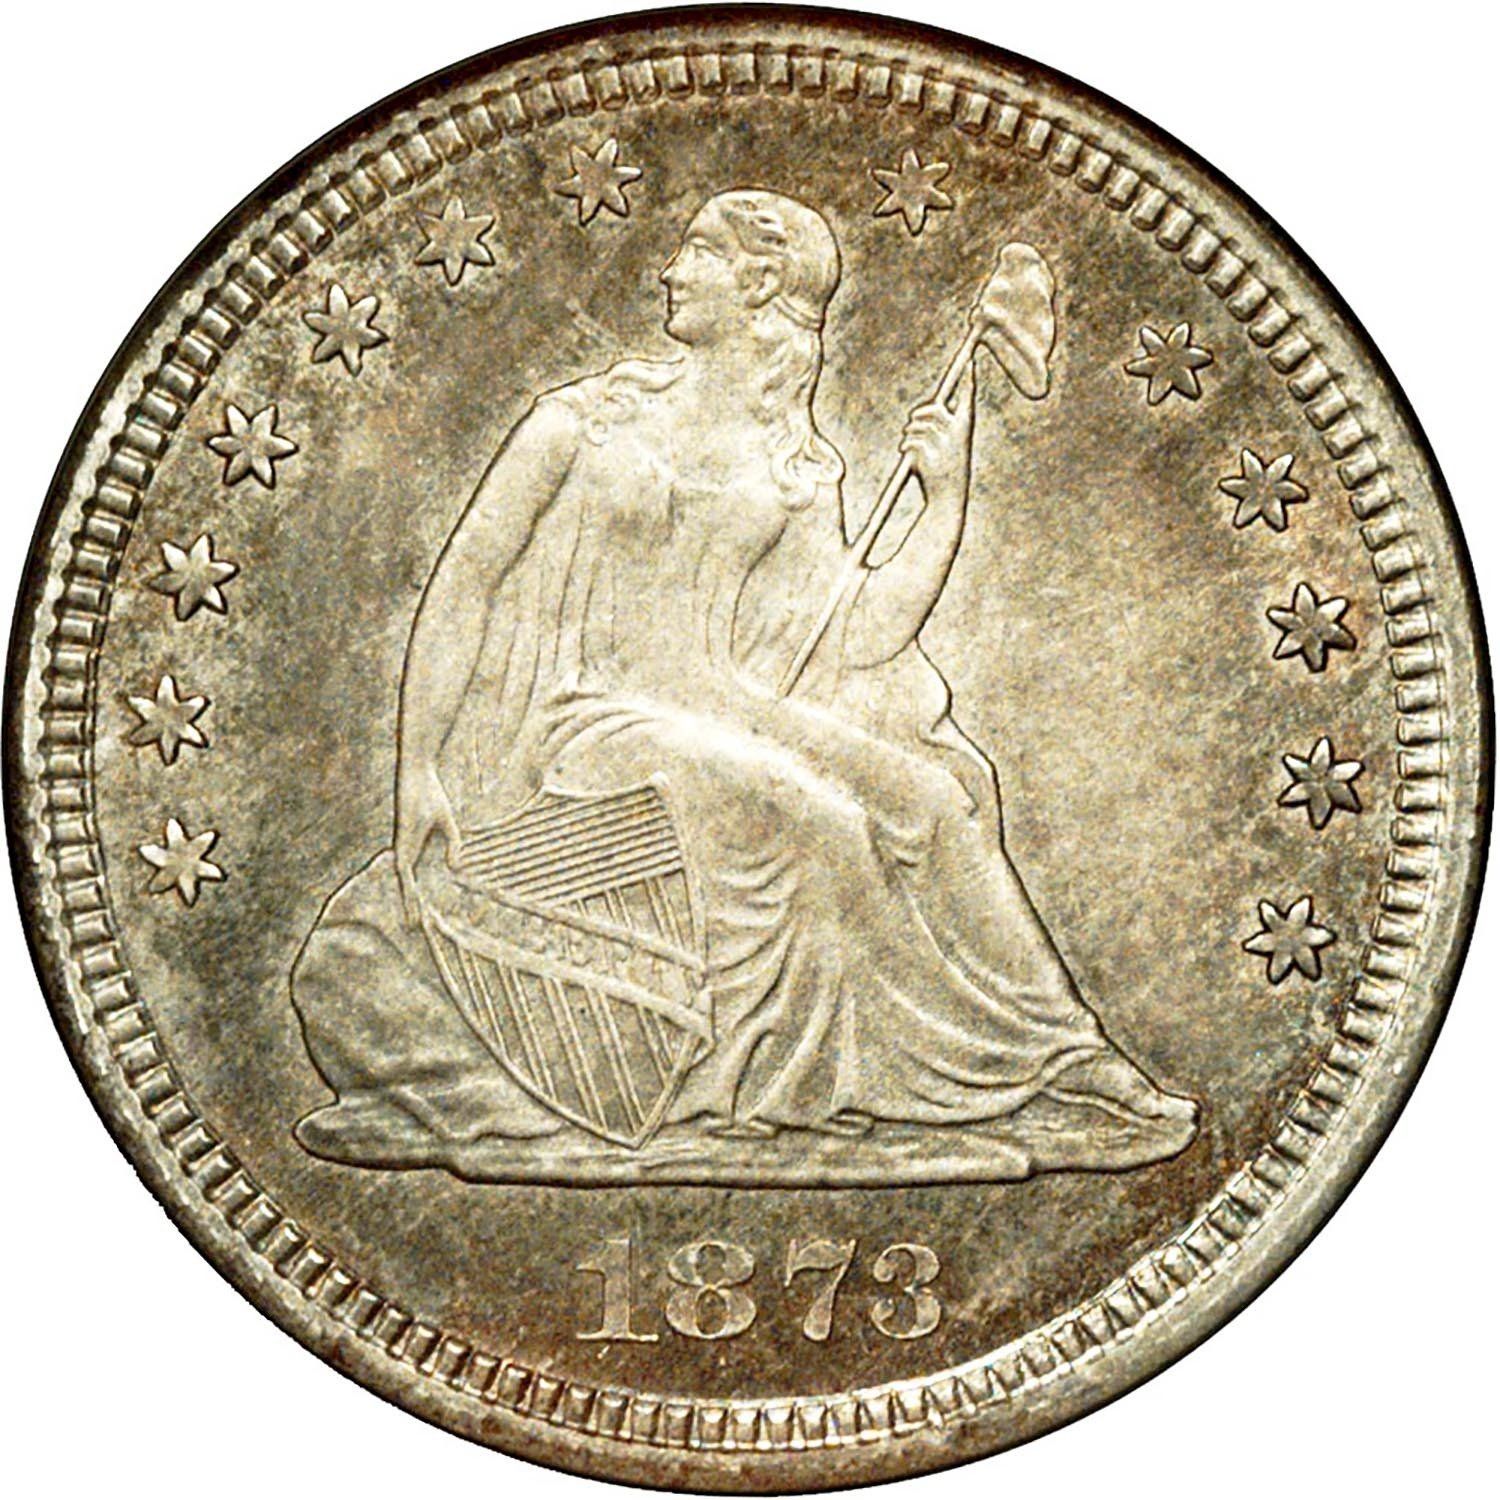 1873 CC no arrows seated liberty quarter image courtesy of NGC